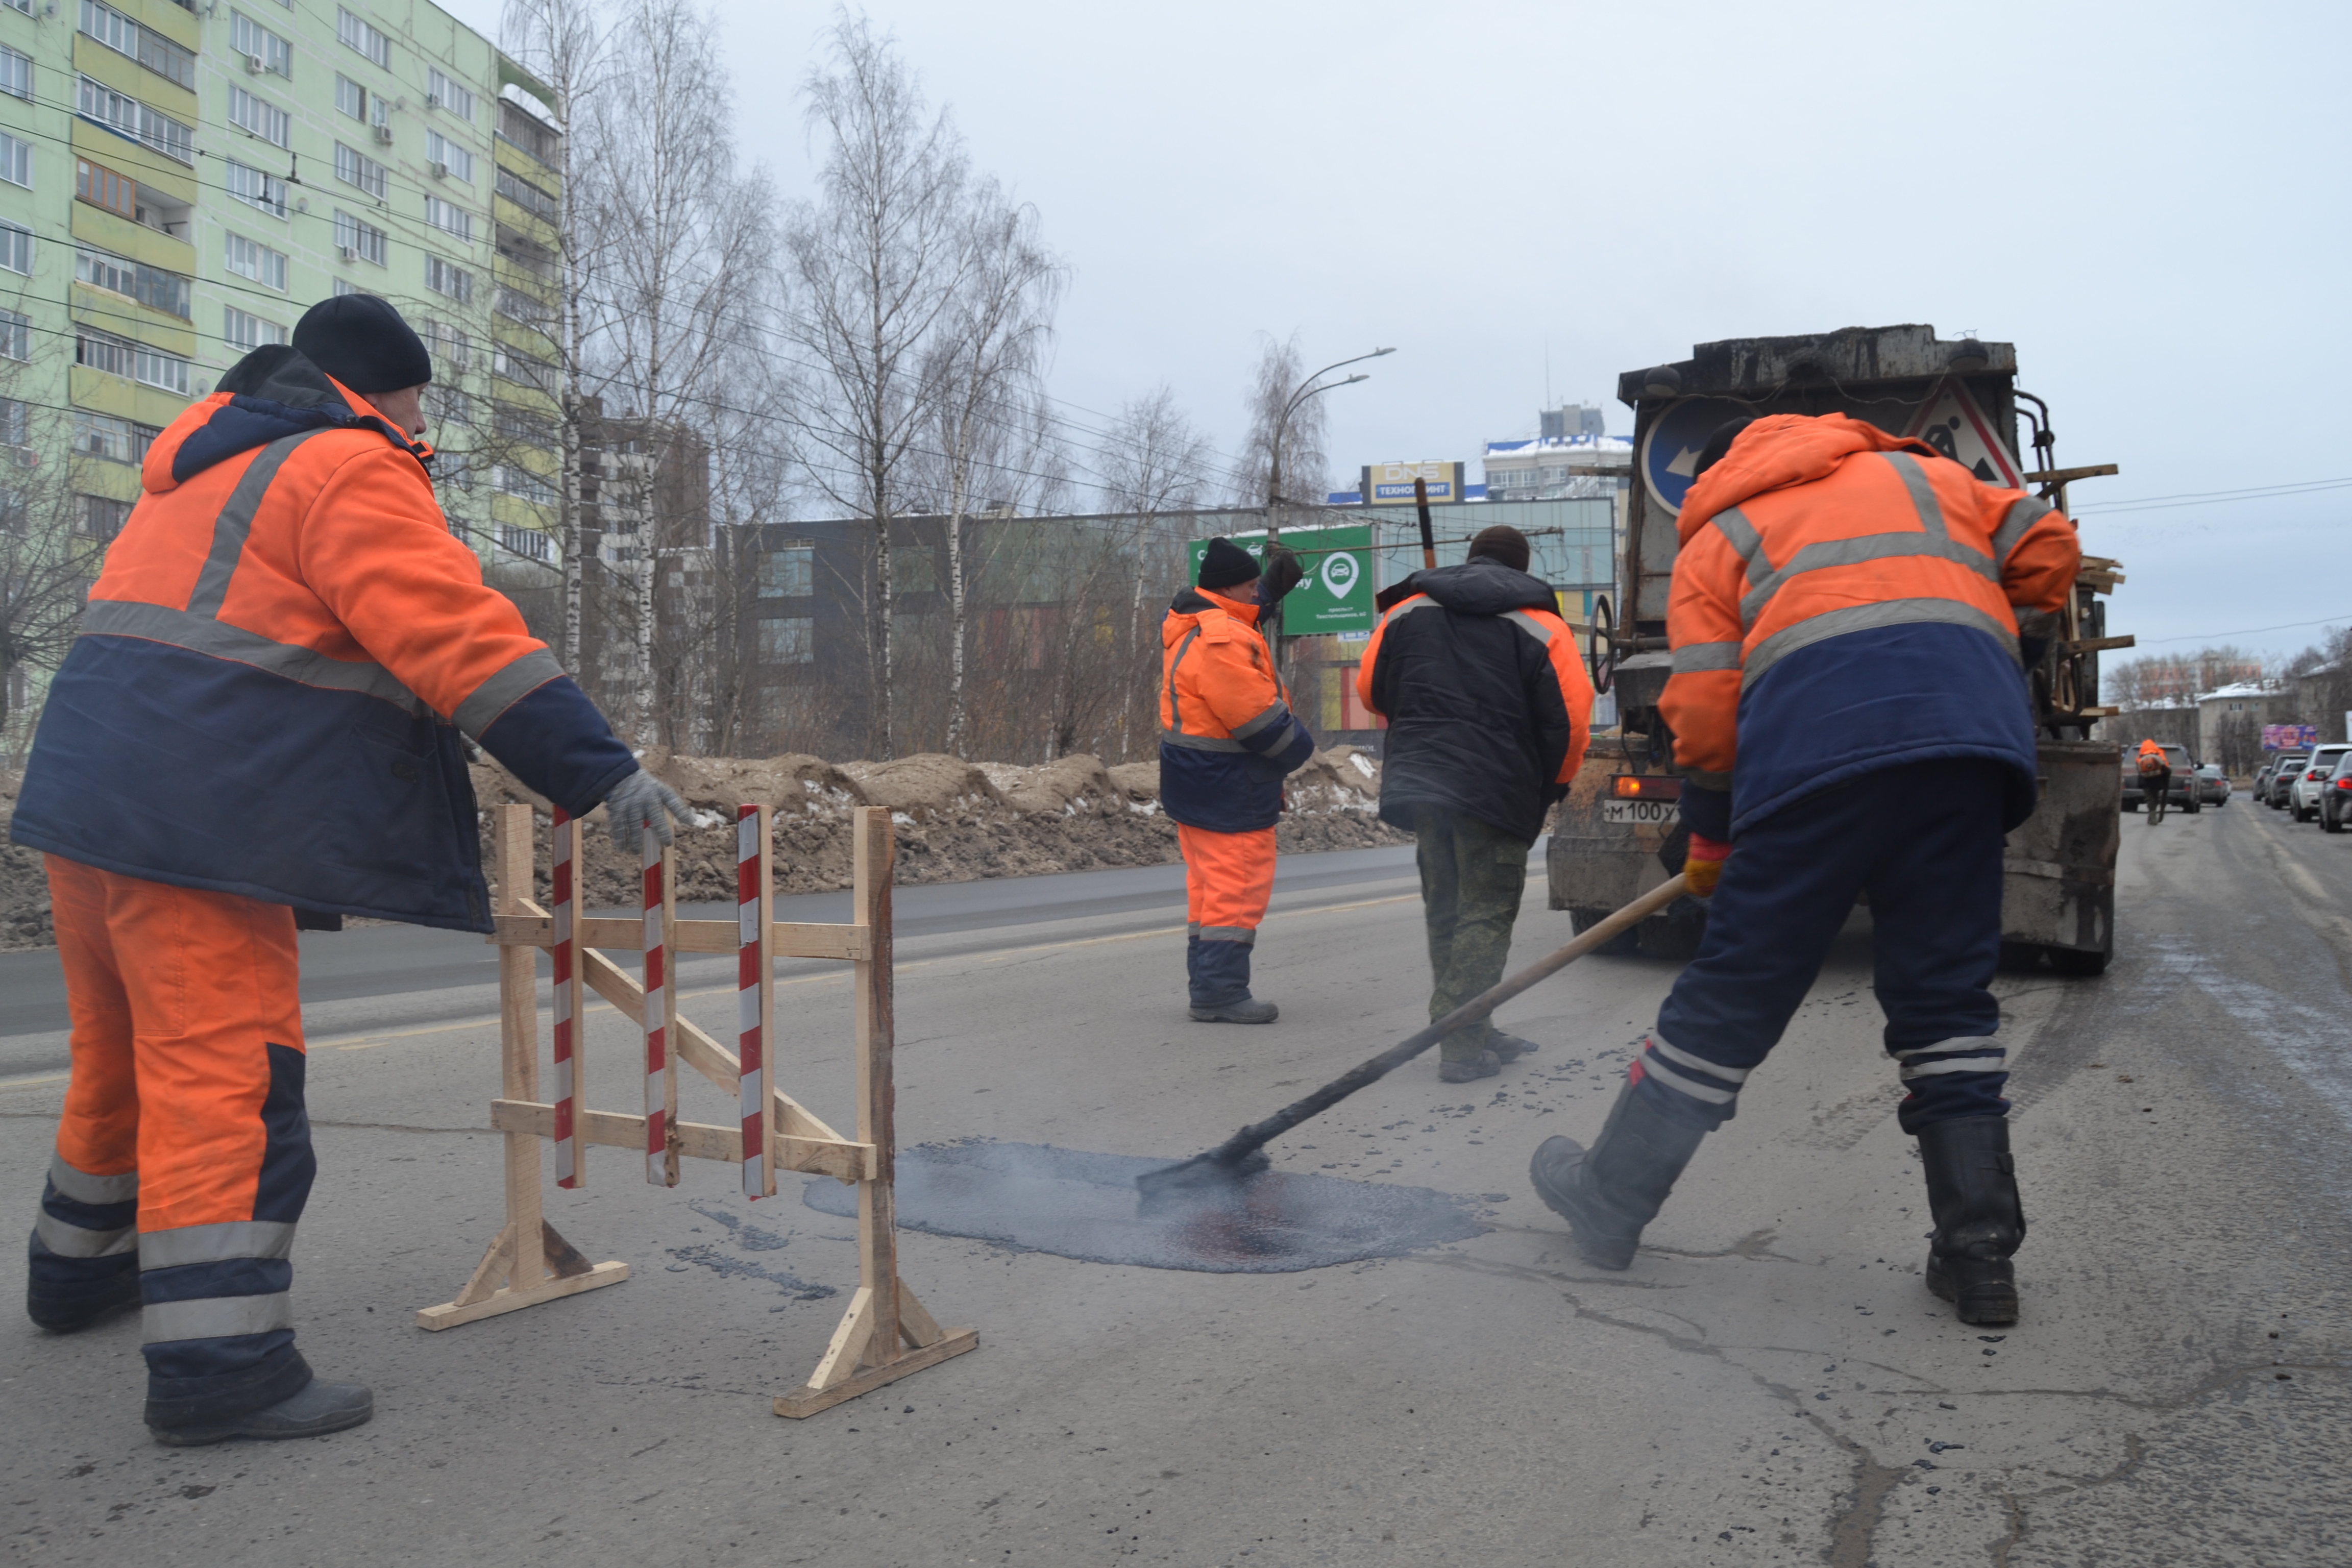 Ямочный ремонт дорог запланирован на улицах Якова Гарелина, Люлина, Cтанционная и Носова.